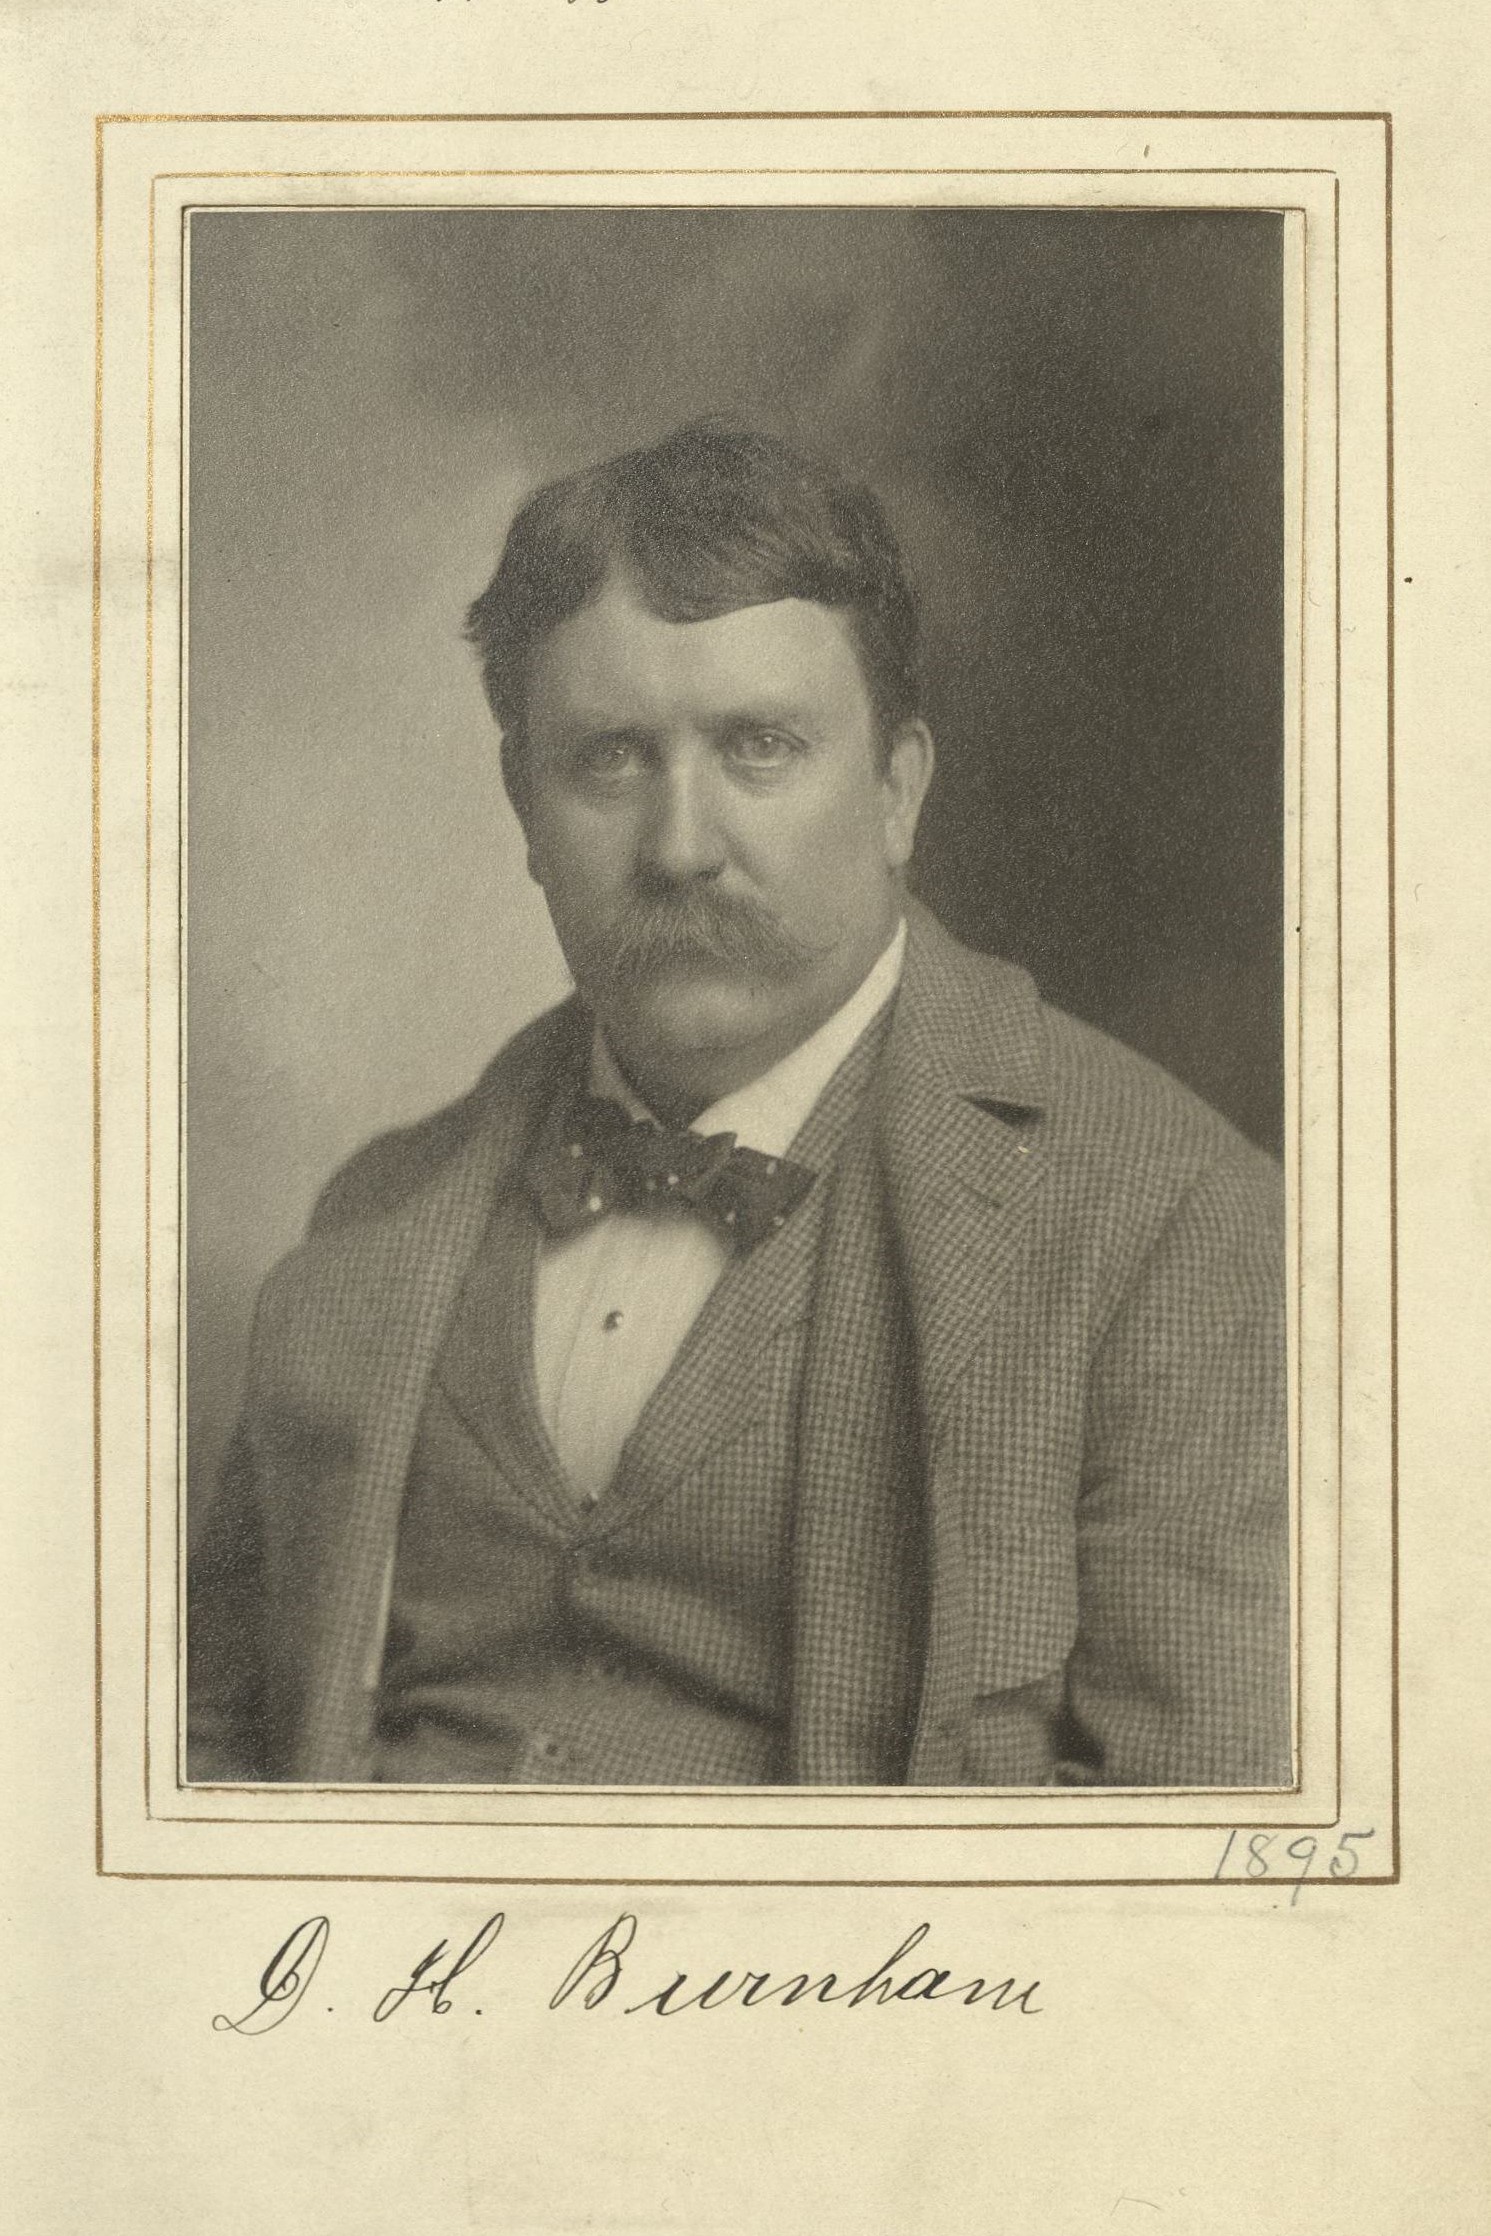 Member portrait of Daniel H. Burnham